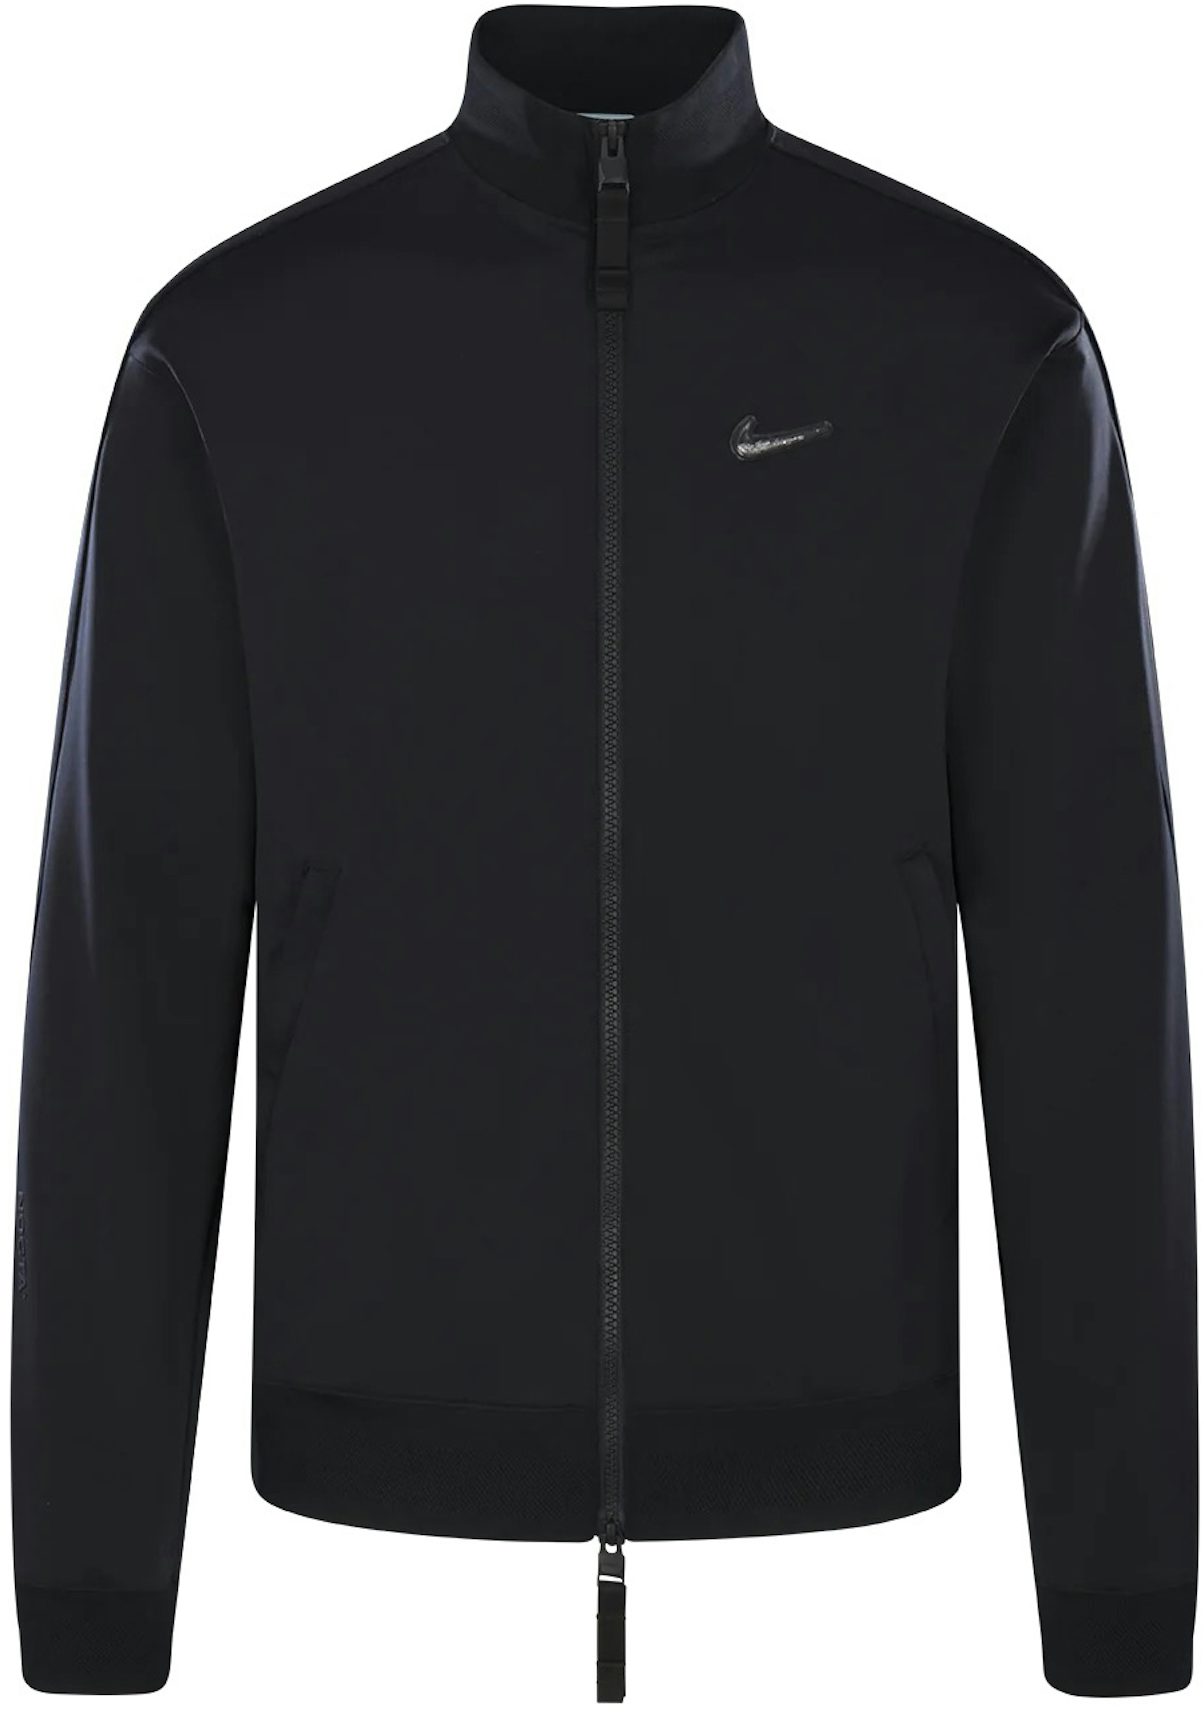 Nike x NOCTA Sunset Puffer Jacket Black Men's - FW20 - US